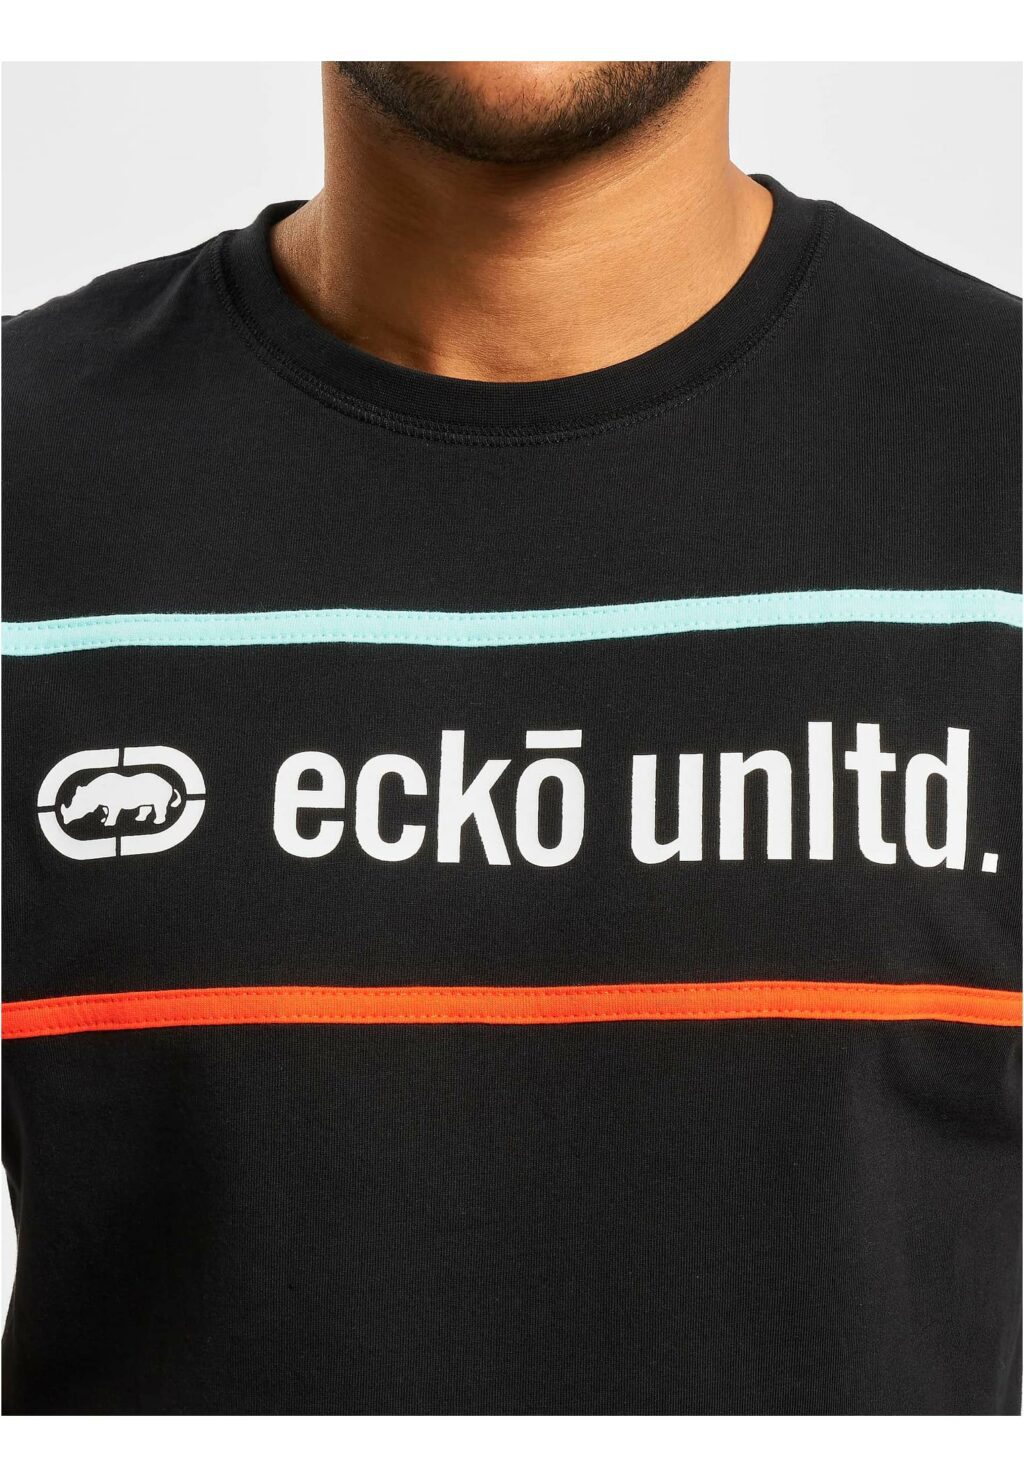 Ecko Unltd. Boort T-Shirt black ECKOTS1110